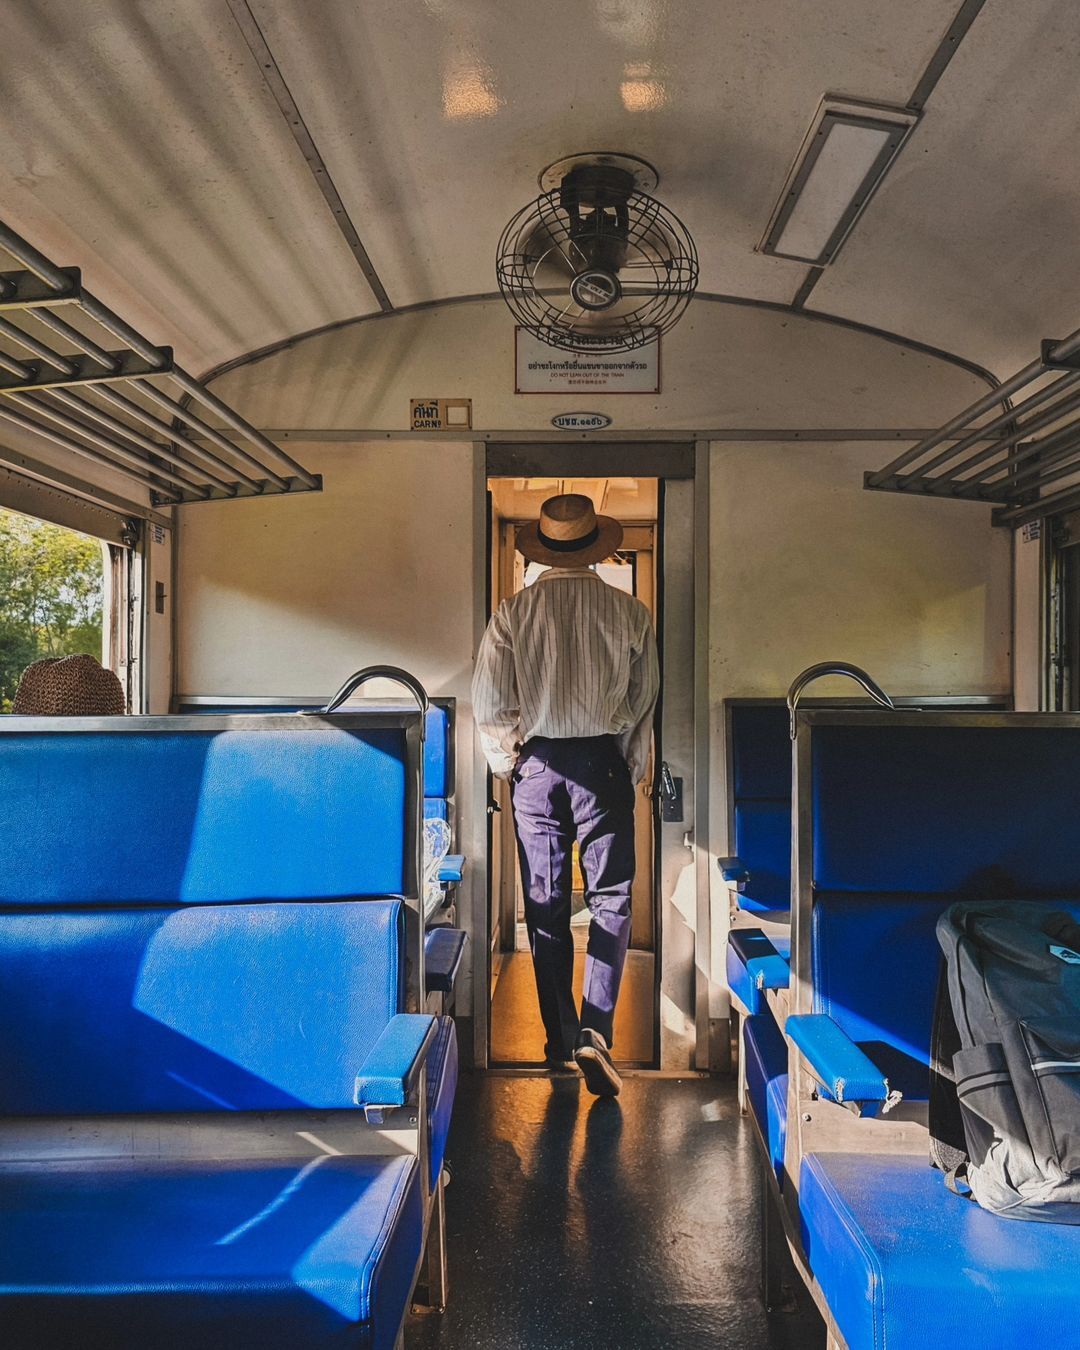 Seats - MySawasdee train ride